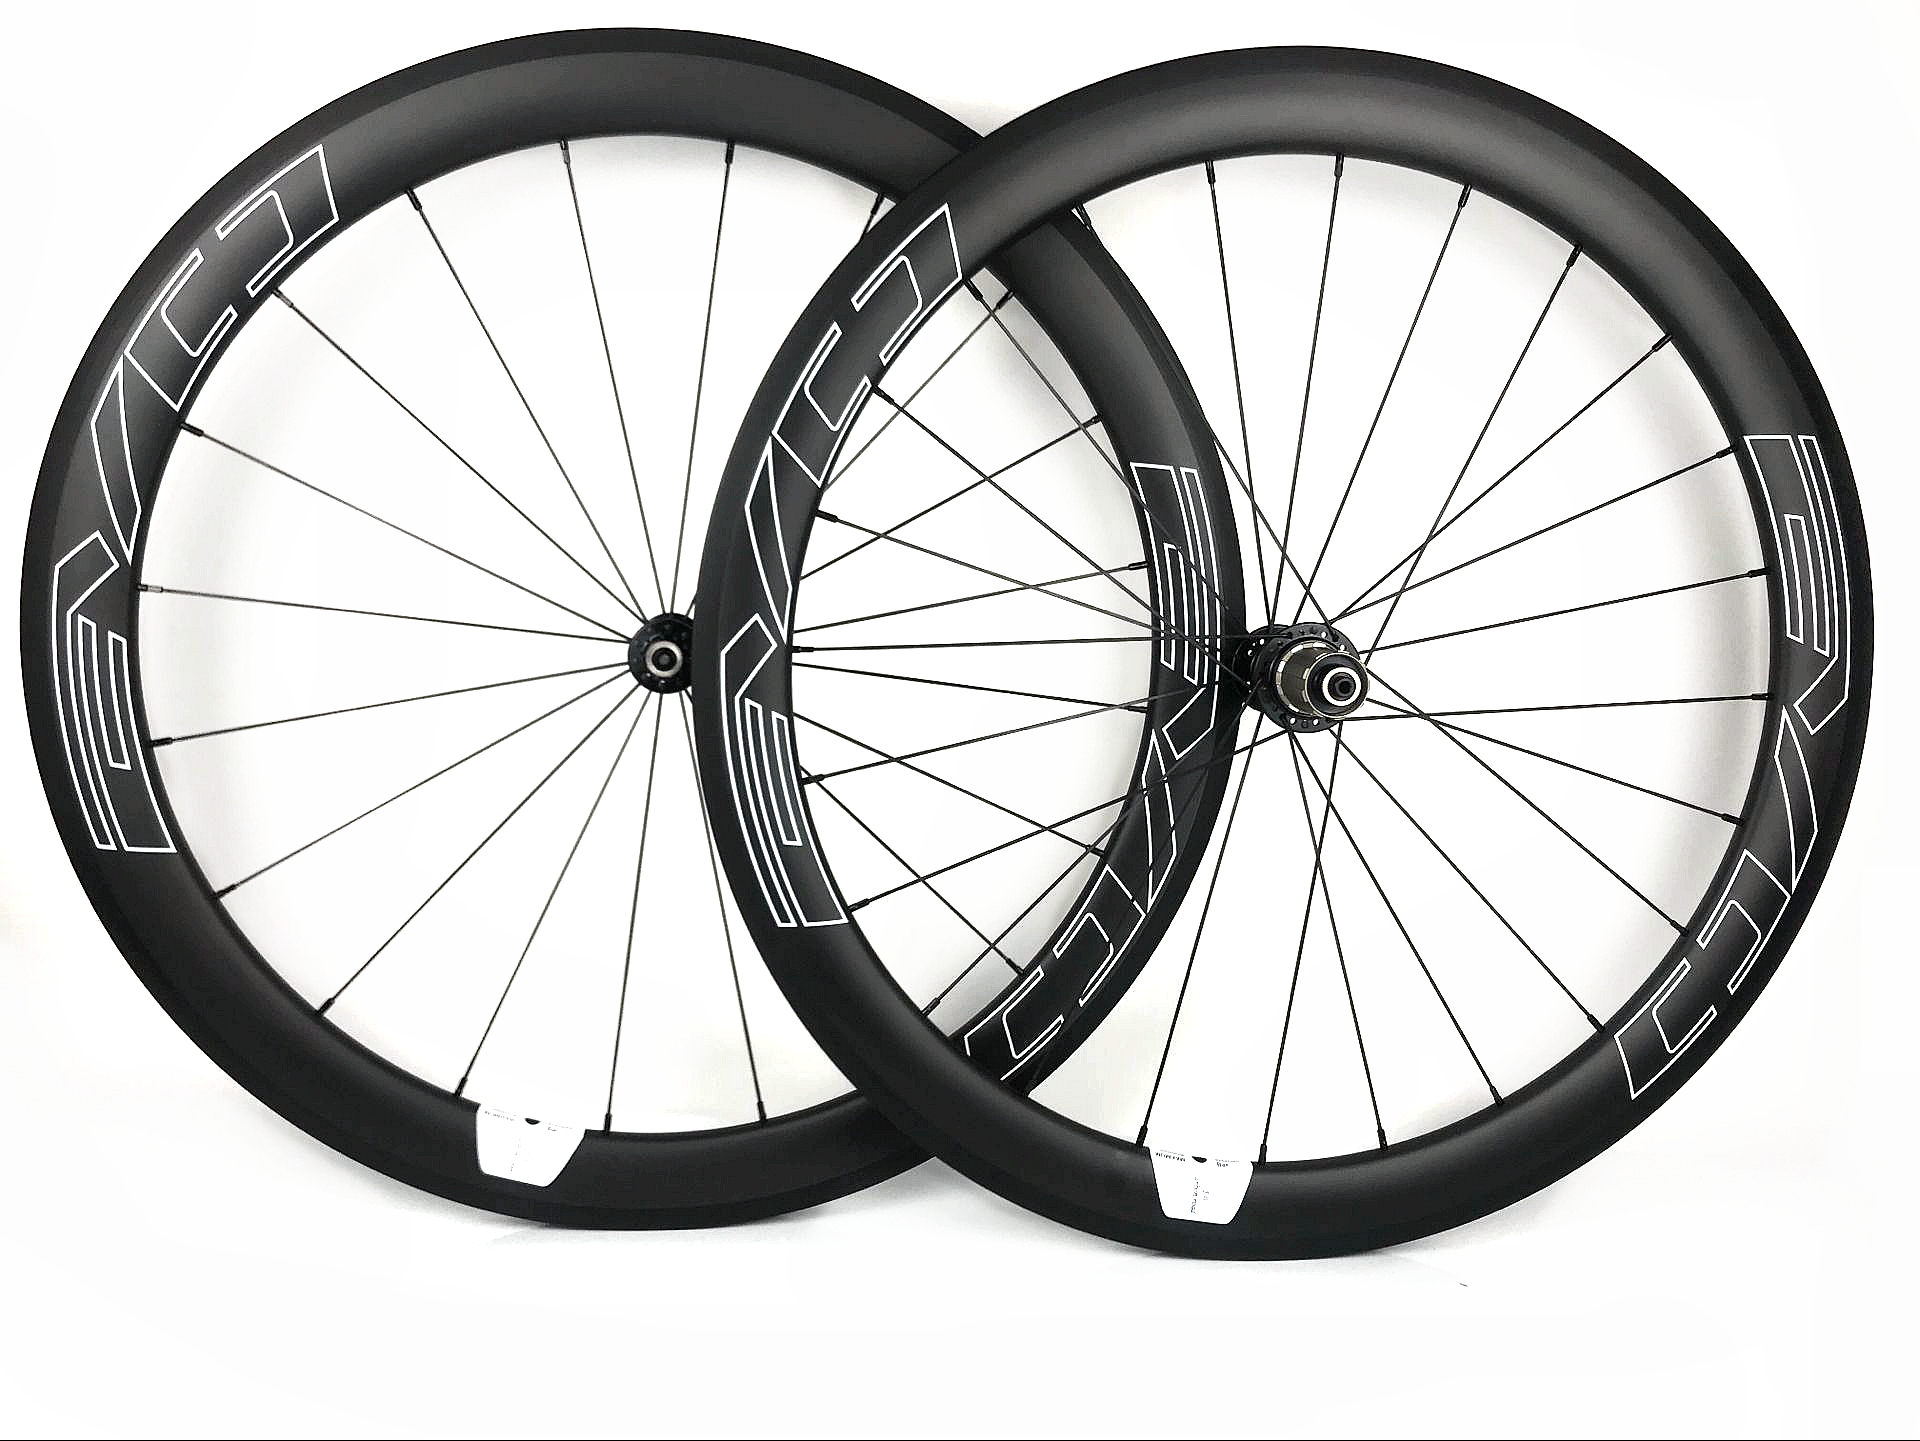 EVO 700C 50mm depth Road bike carbon wheels 25mm width clincher/tubular bicycle super light aero carbon wheelset with 1420 spoke